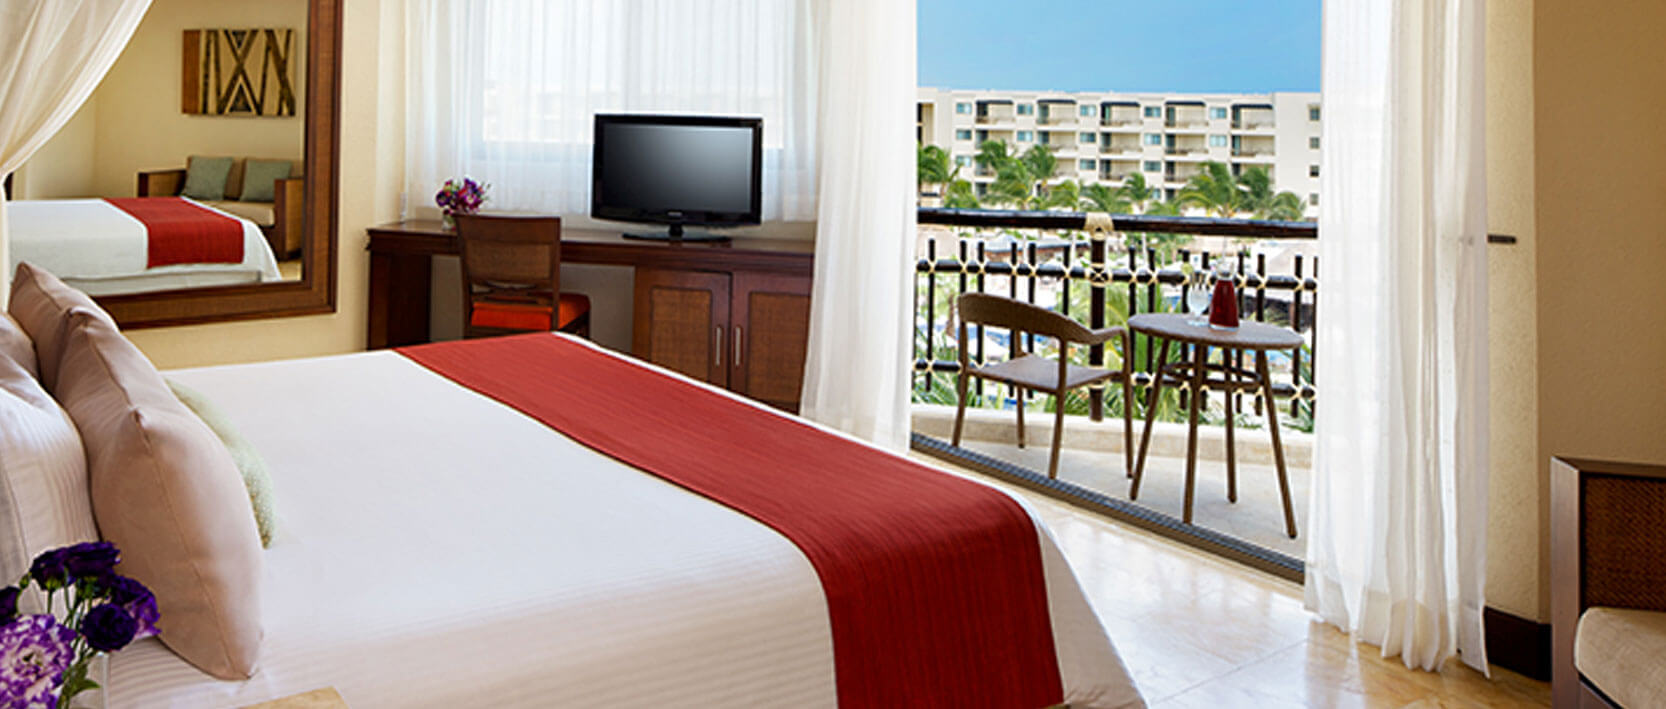 Dreams Riviera Cancun Resort Accommodations - Preferred Club Ocean View